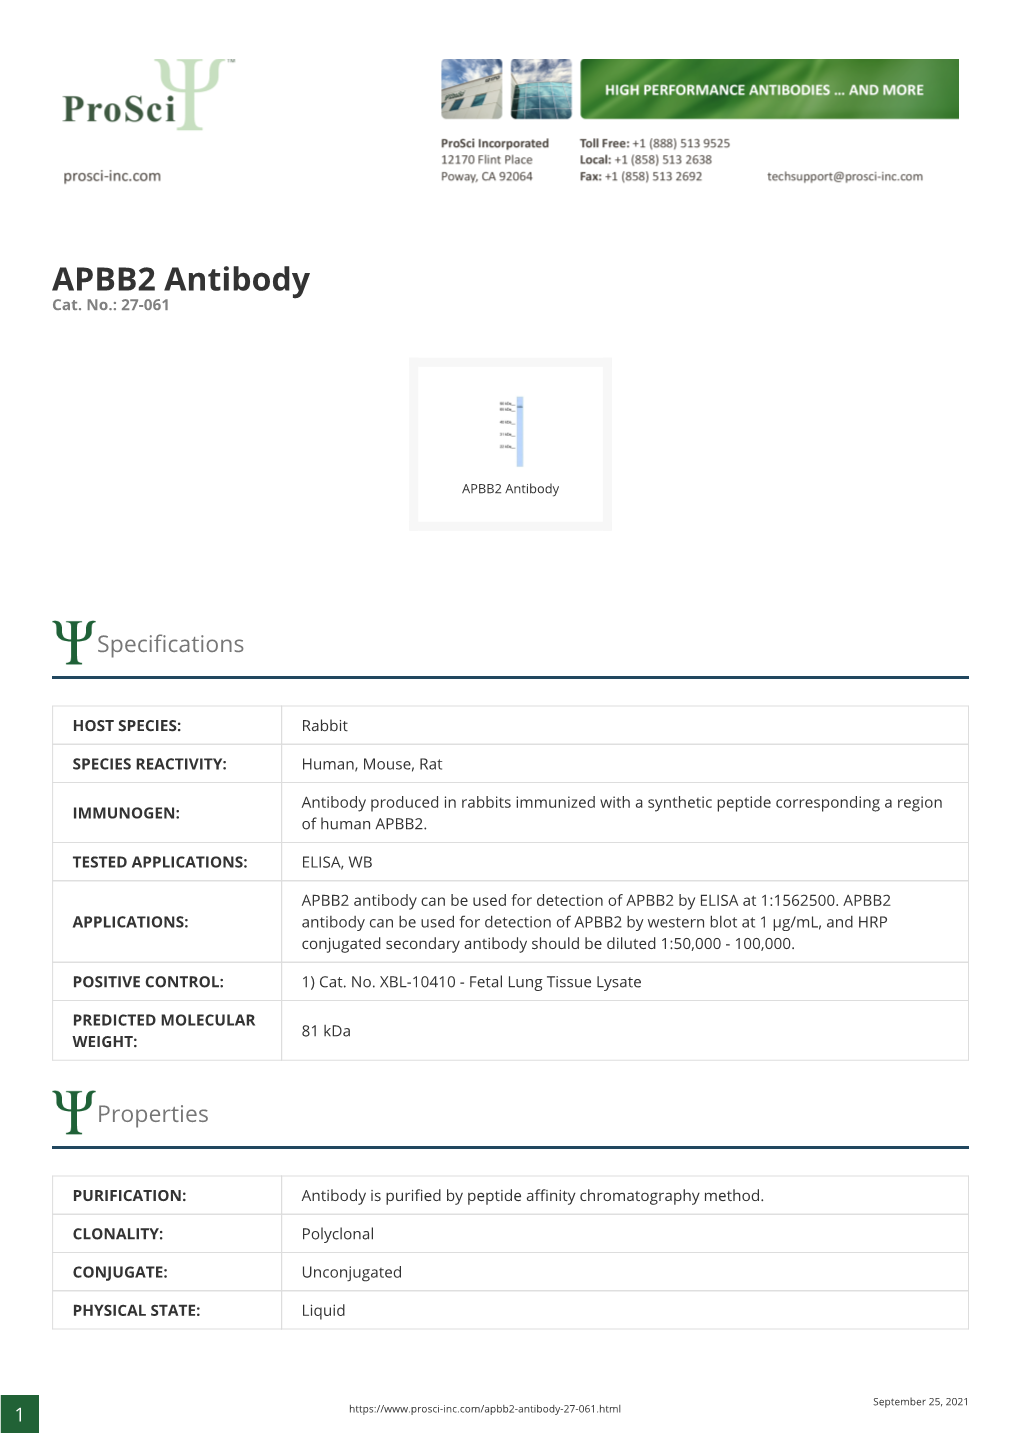 APBB2 Antibody Cat